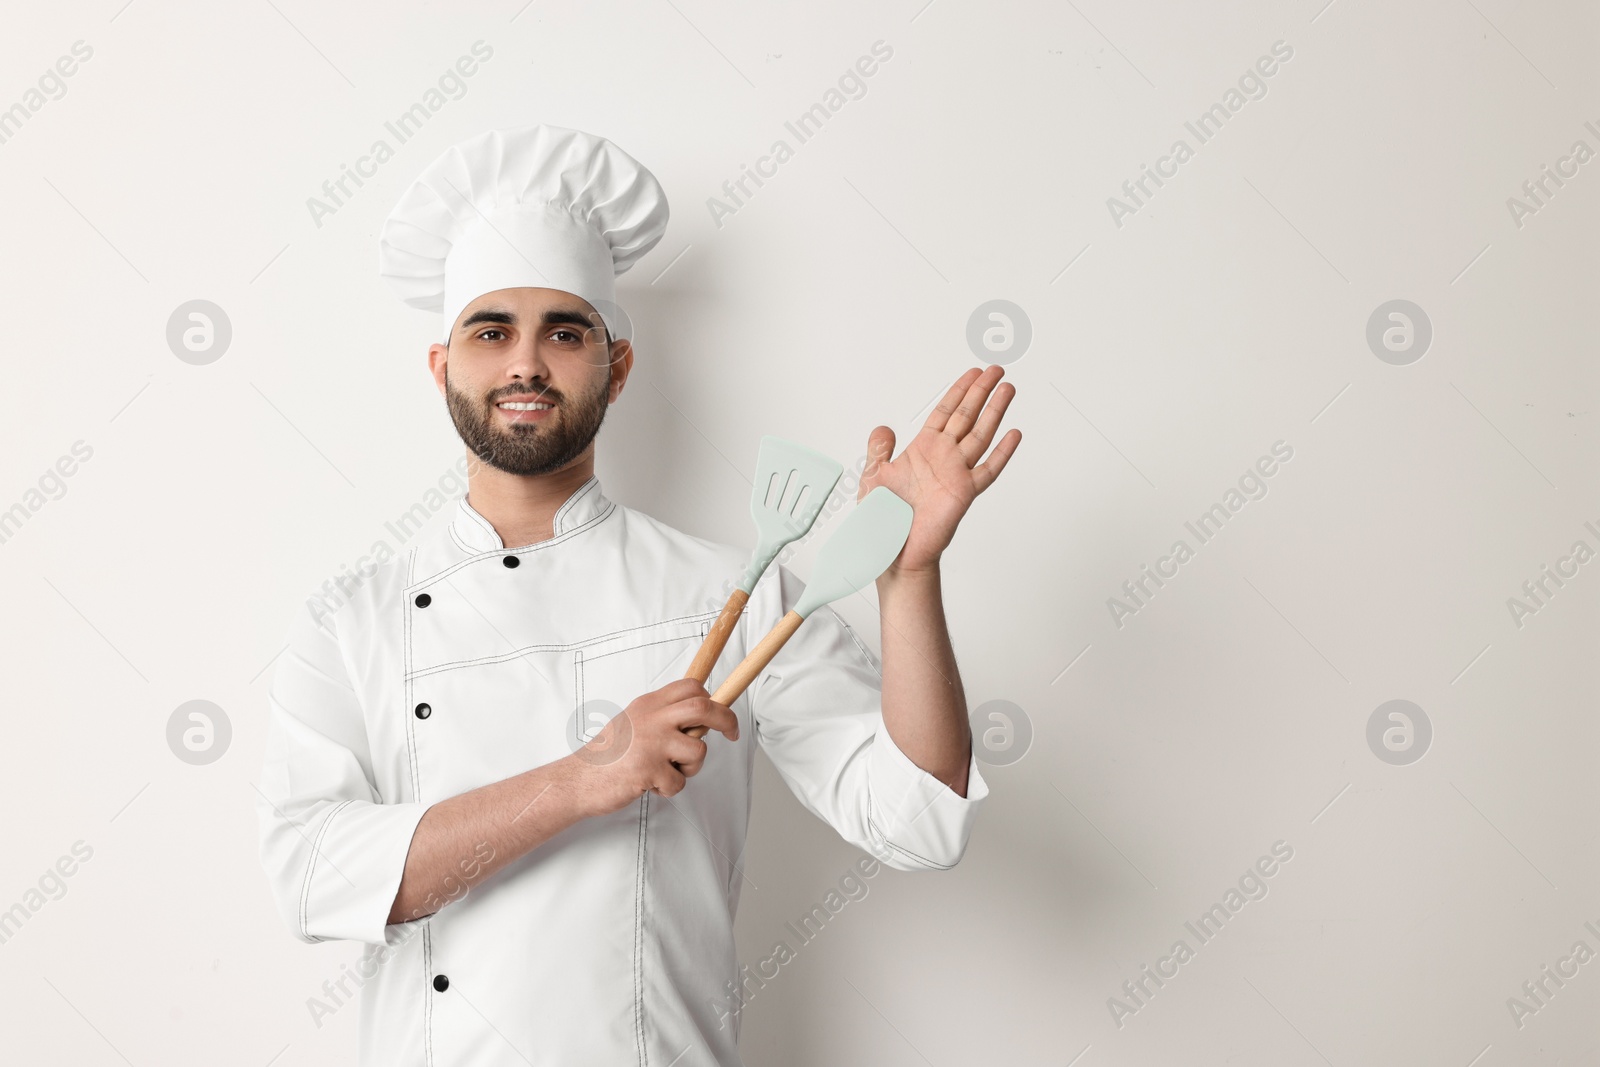 Photo of Professional chef holding kitchen utensils on white background